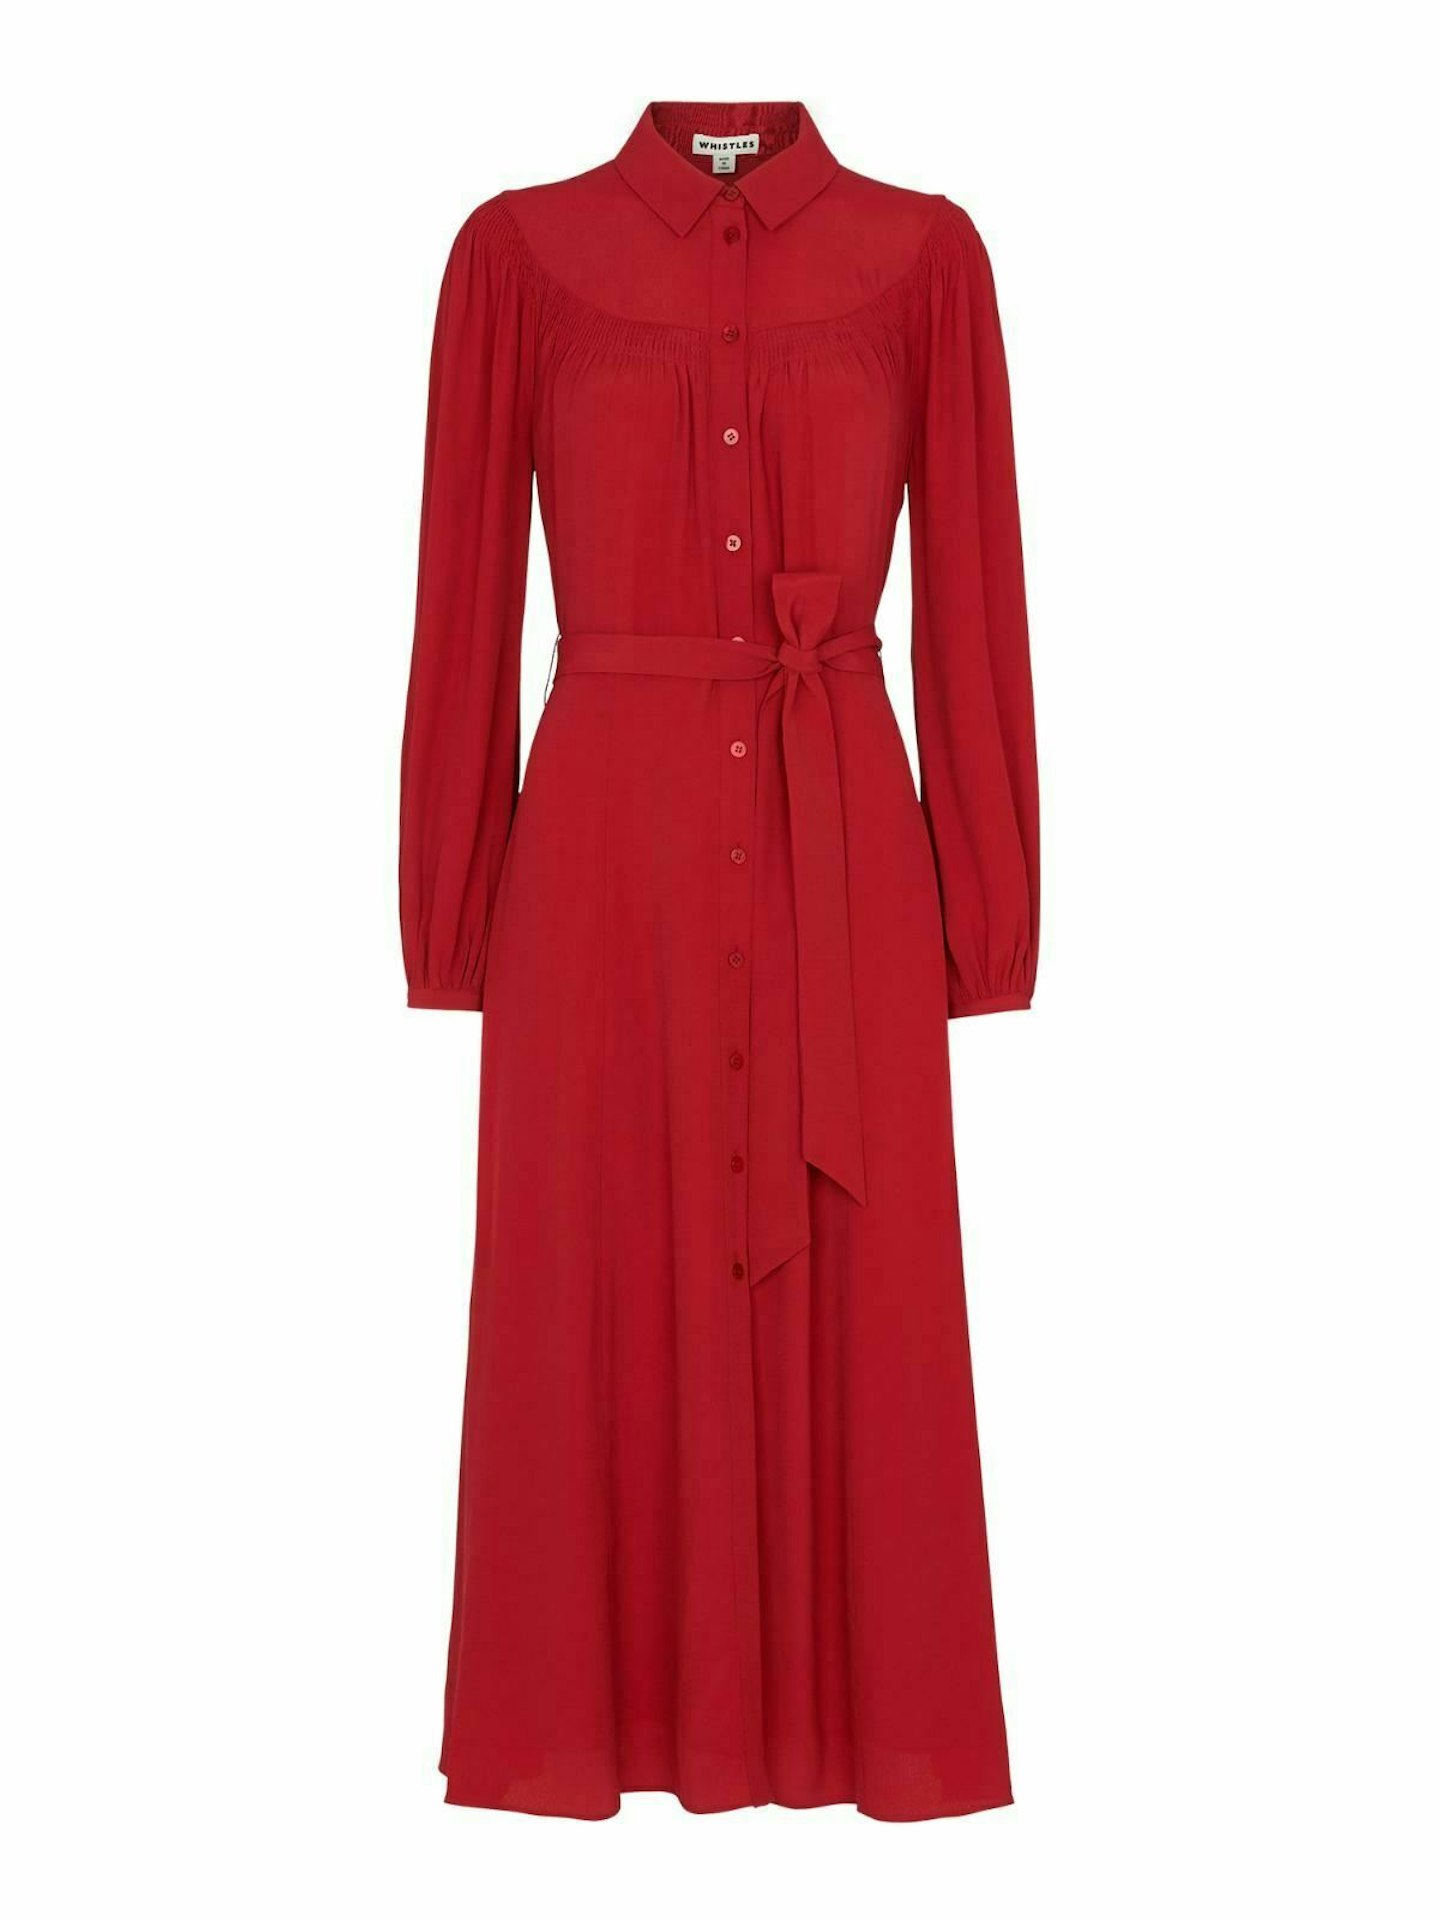 Whistles, Shirt Dress, £38.05